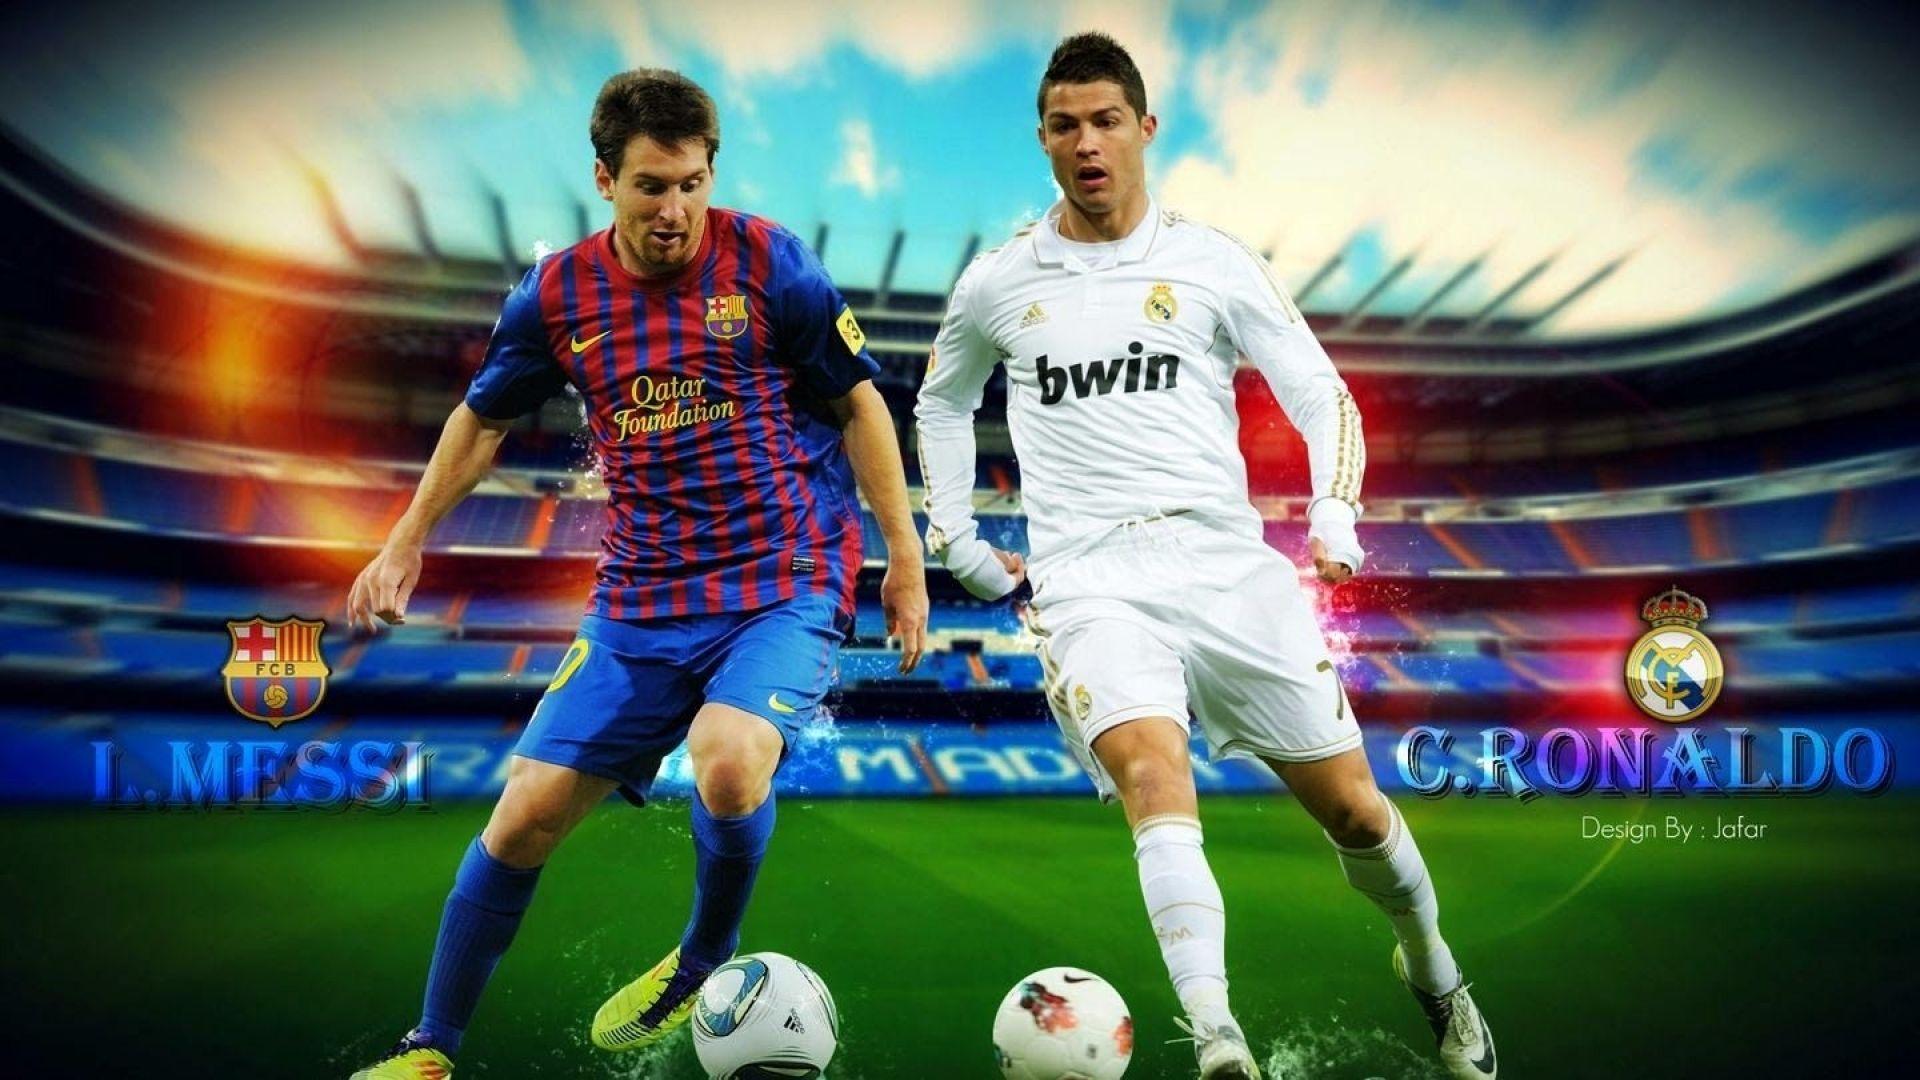 Messi and Ronaldo Wallpaper Download. Soccer Wallpaper